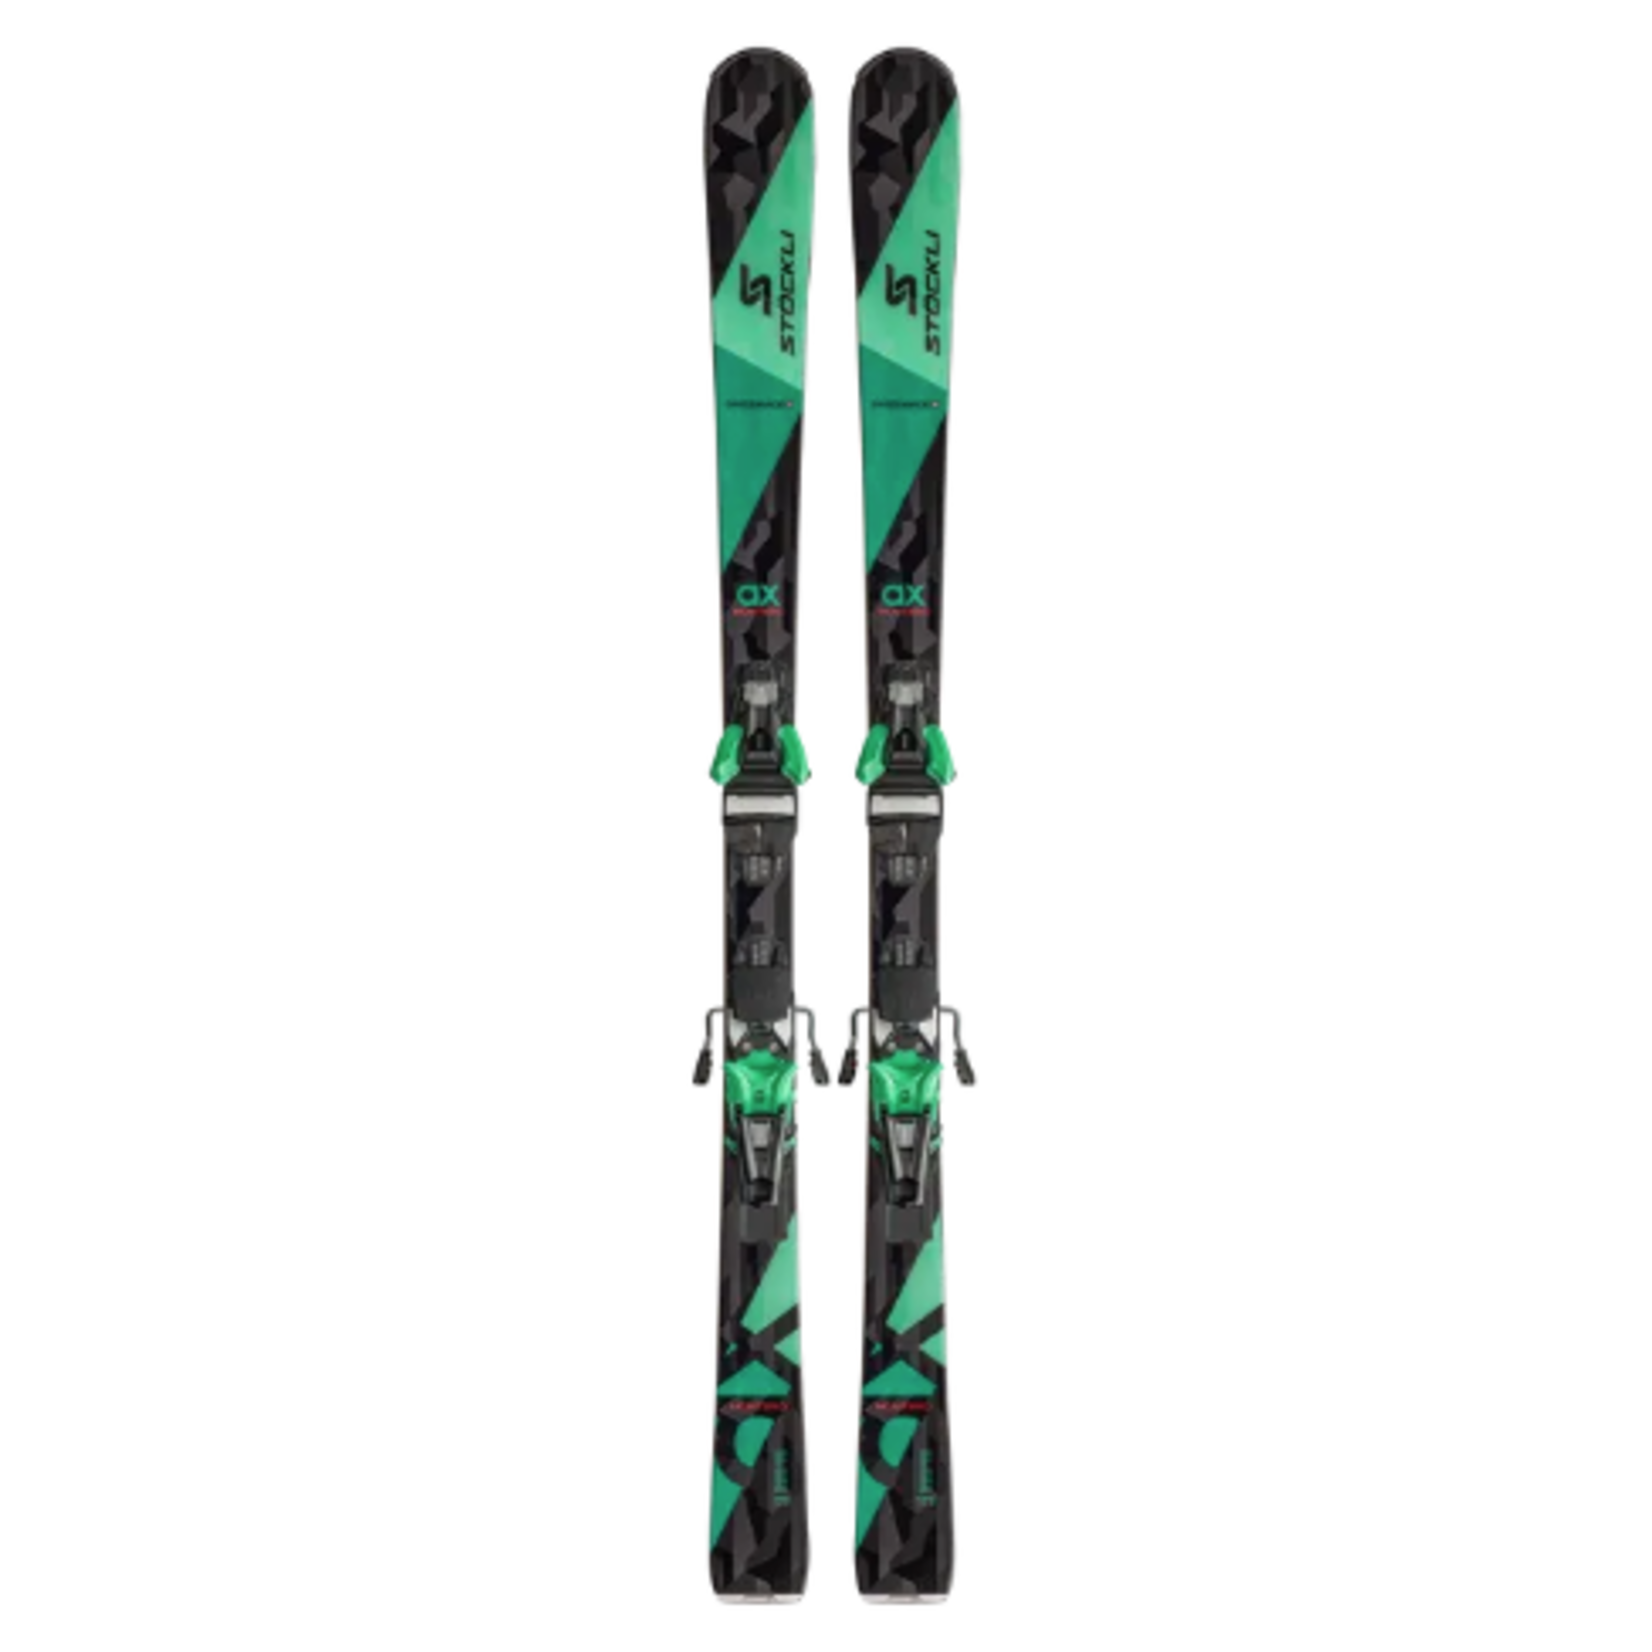 Stockli Stockli Montero AX Skis with Strive 13 Binding 2024